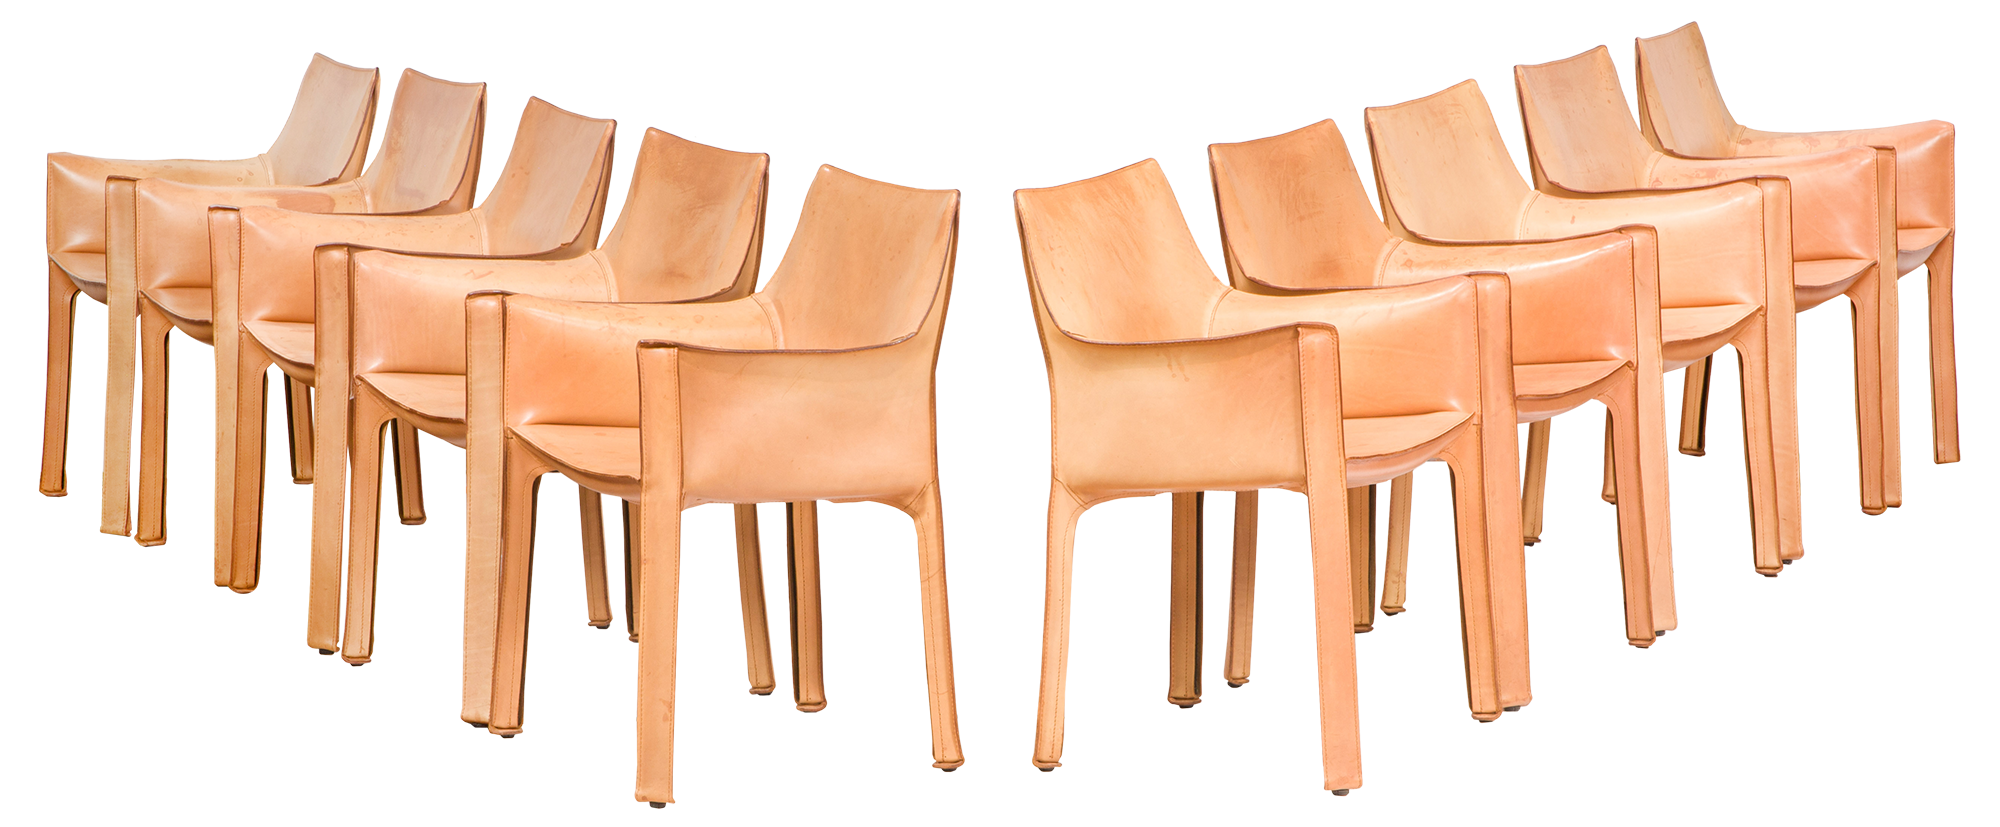 Mario Bellini, Cab Chairs Model 413, set of ten.